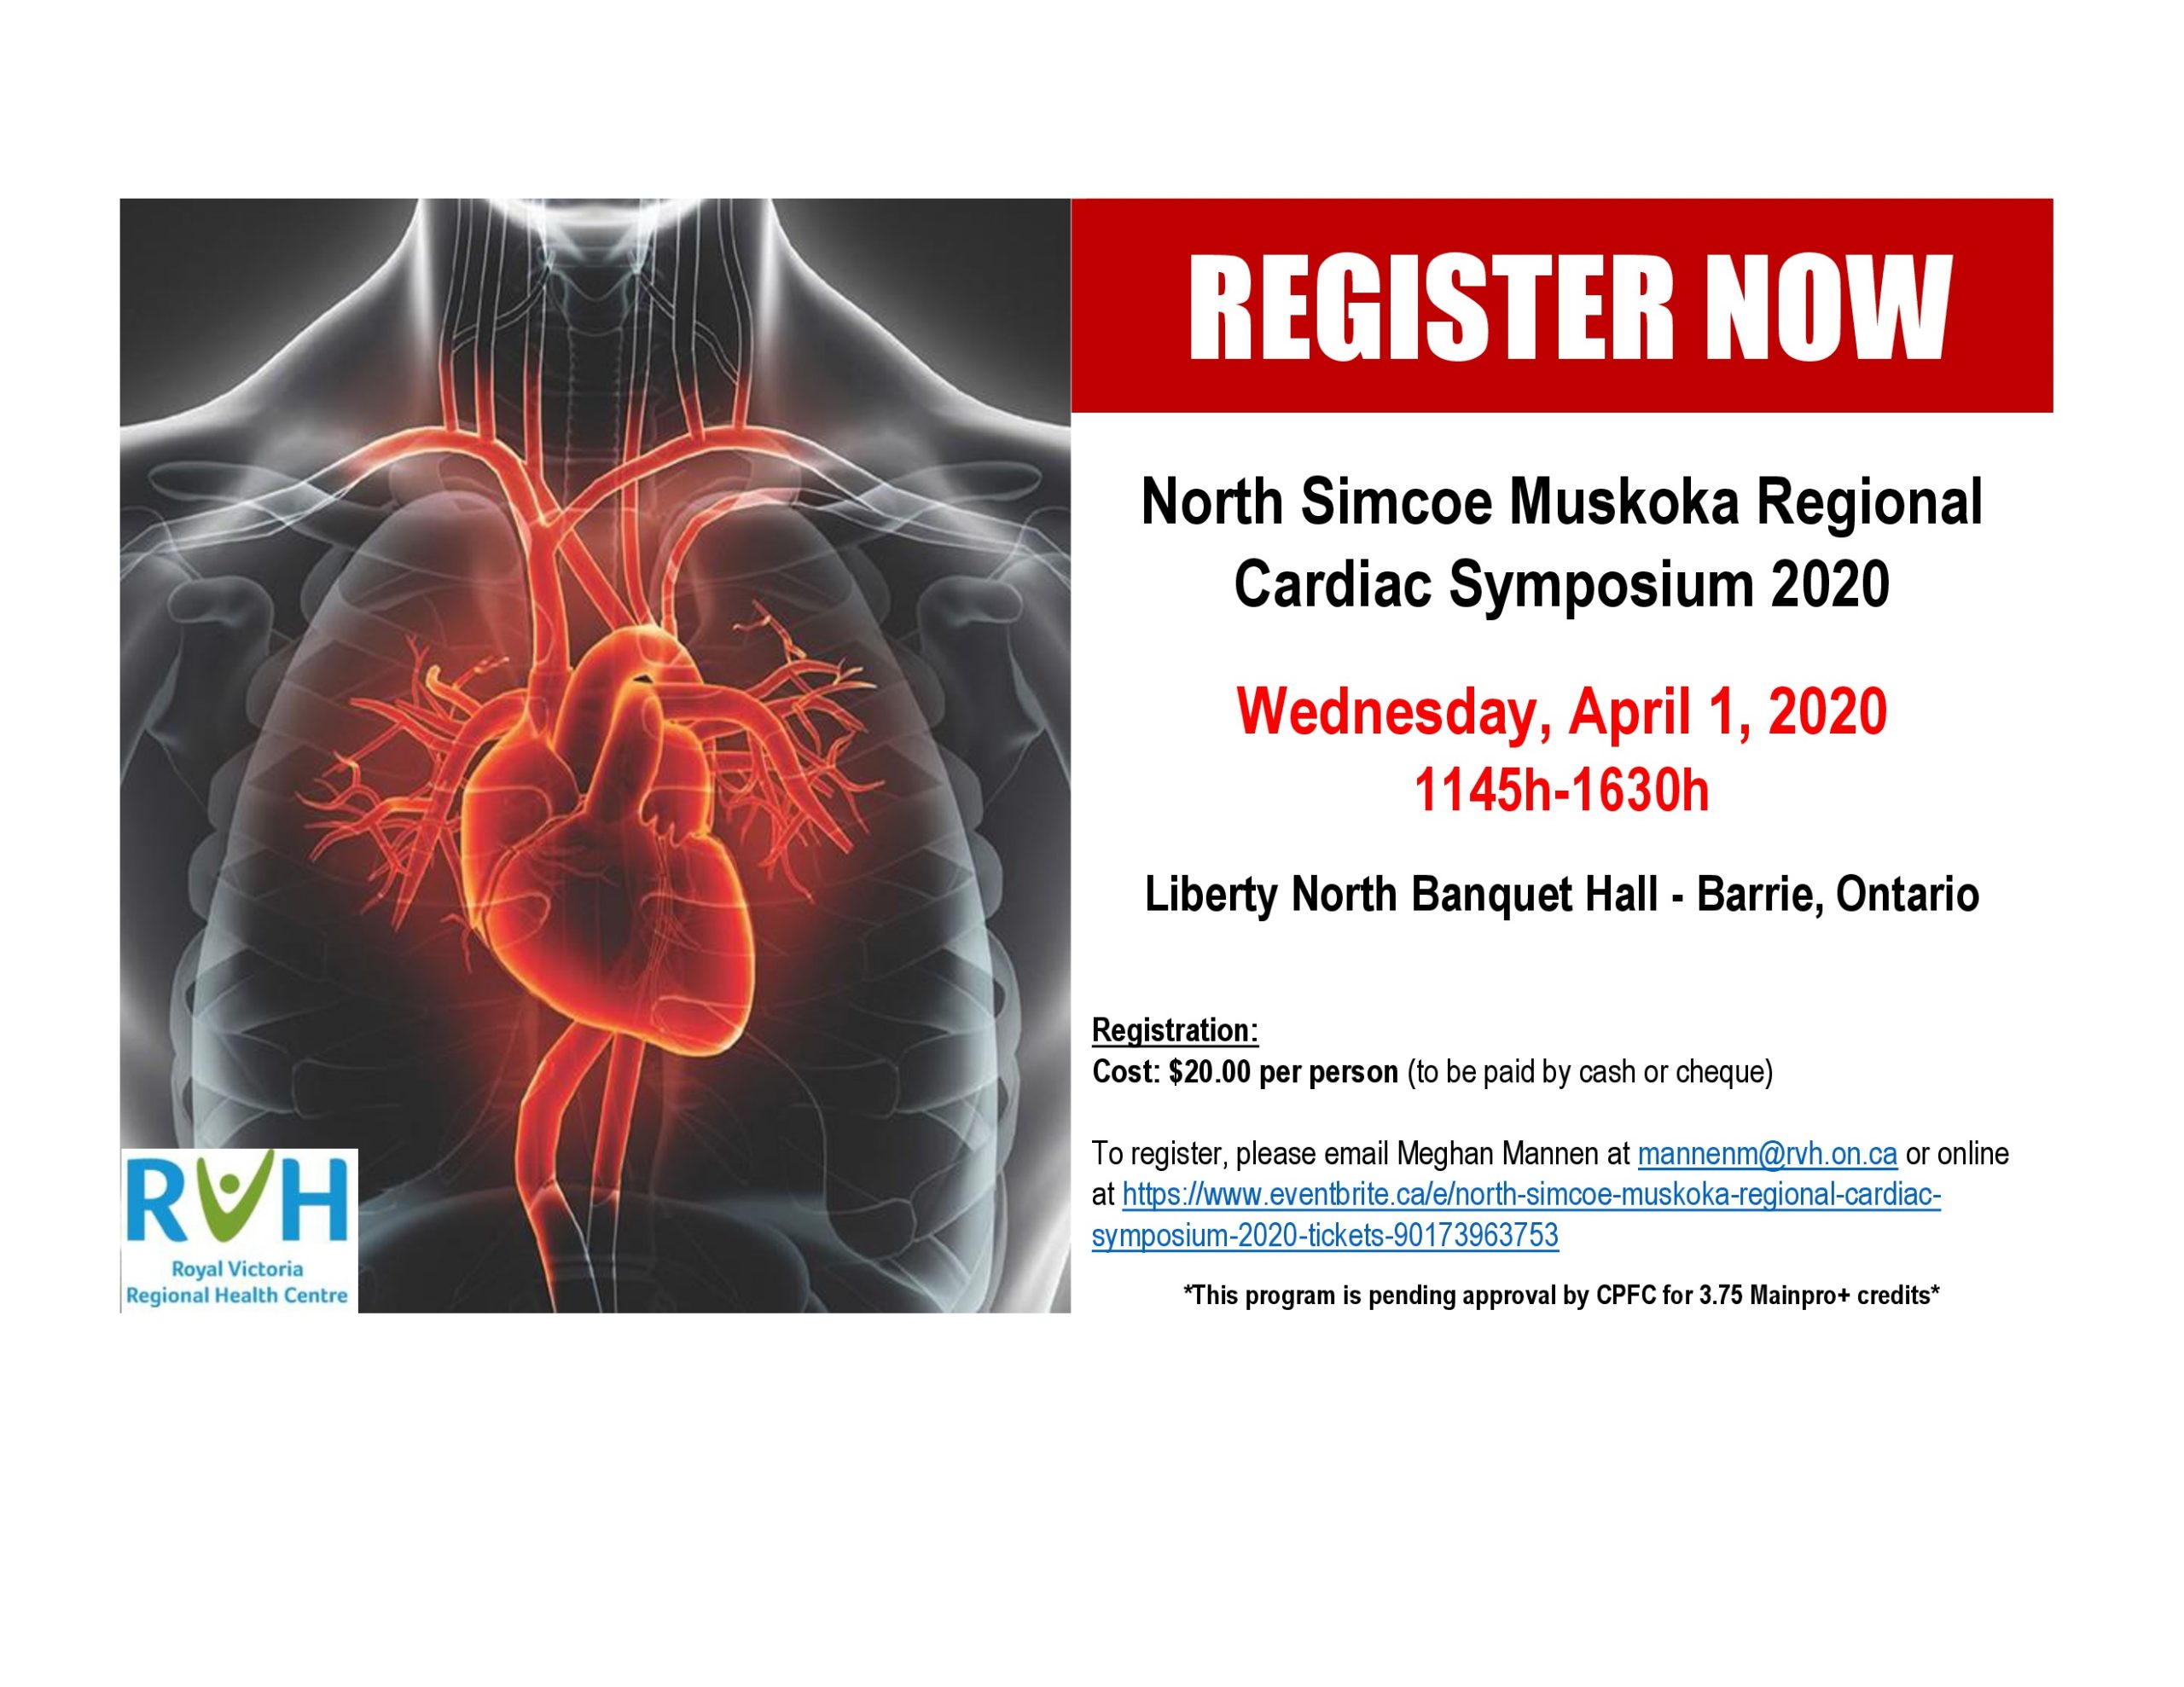 North Simcoe Muskoka Regional Cardiac Symposium Barrie and Community